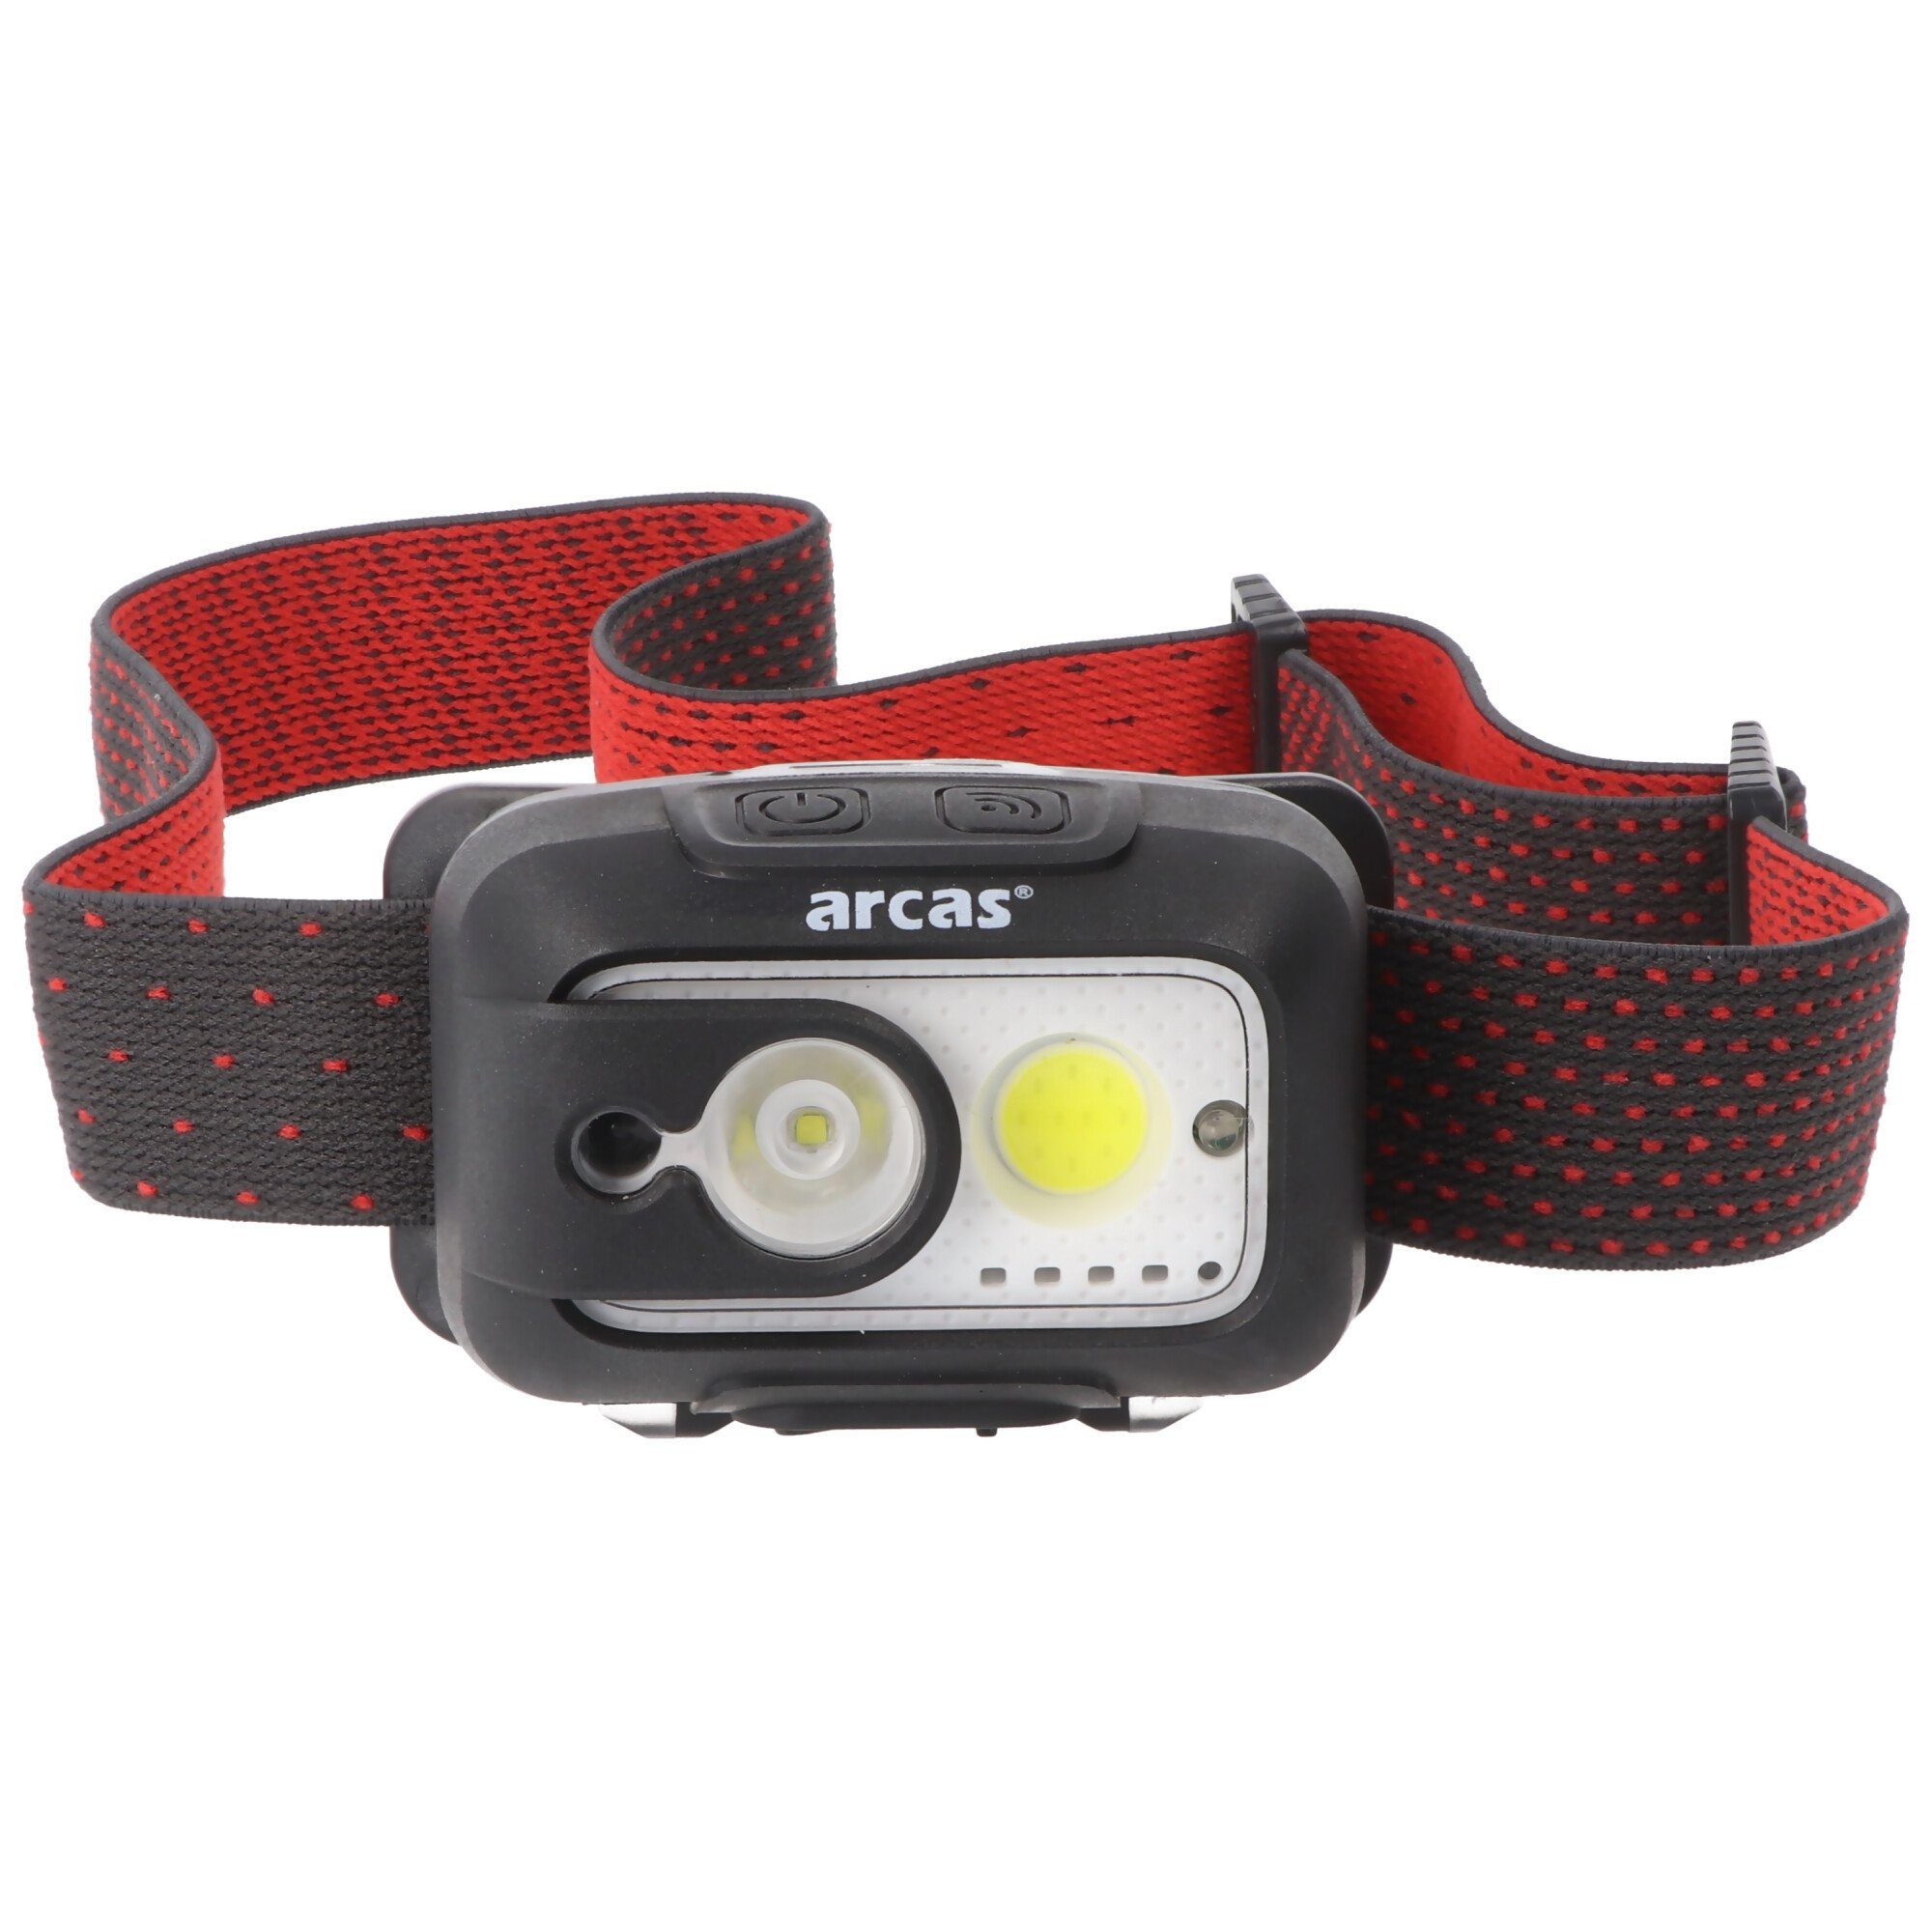 Arcas LED Stirnlampe Kopflampe, mal drücken: beide LEDs an, Sensortaste 1